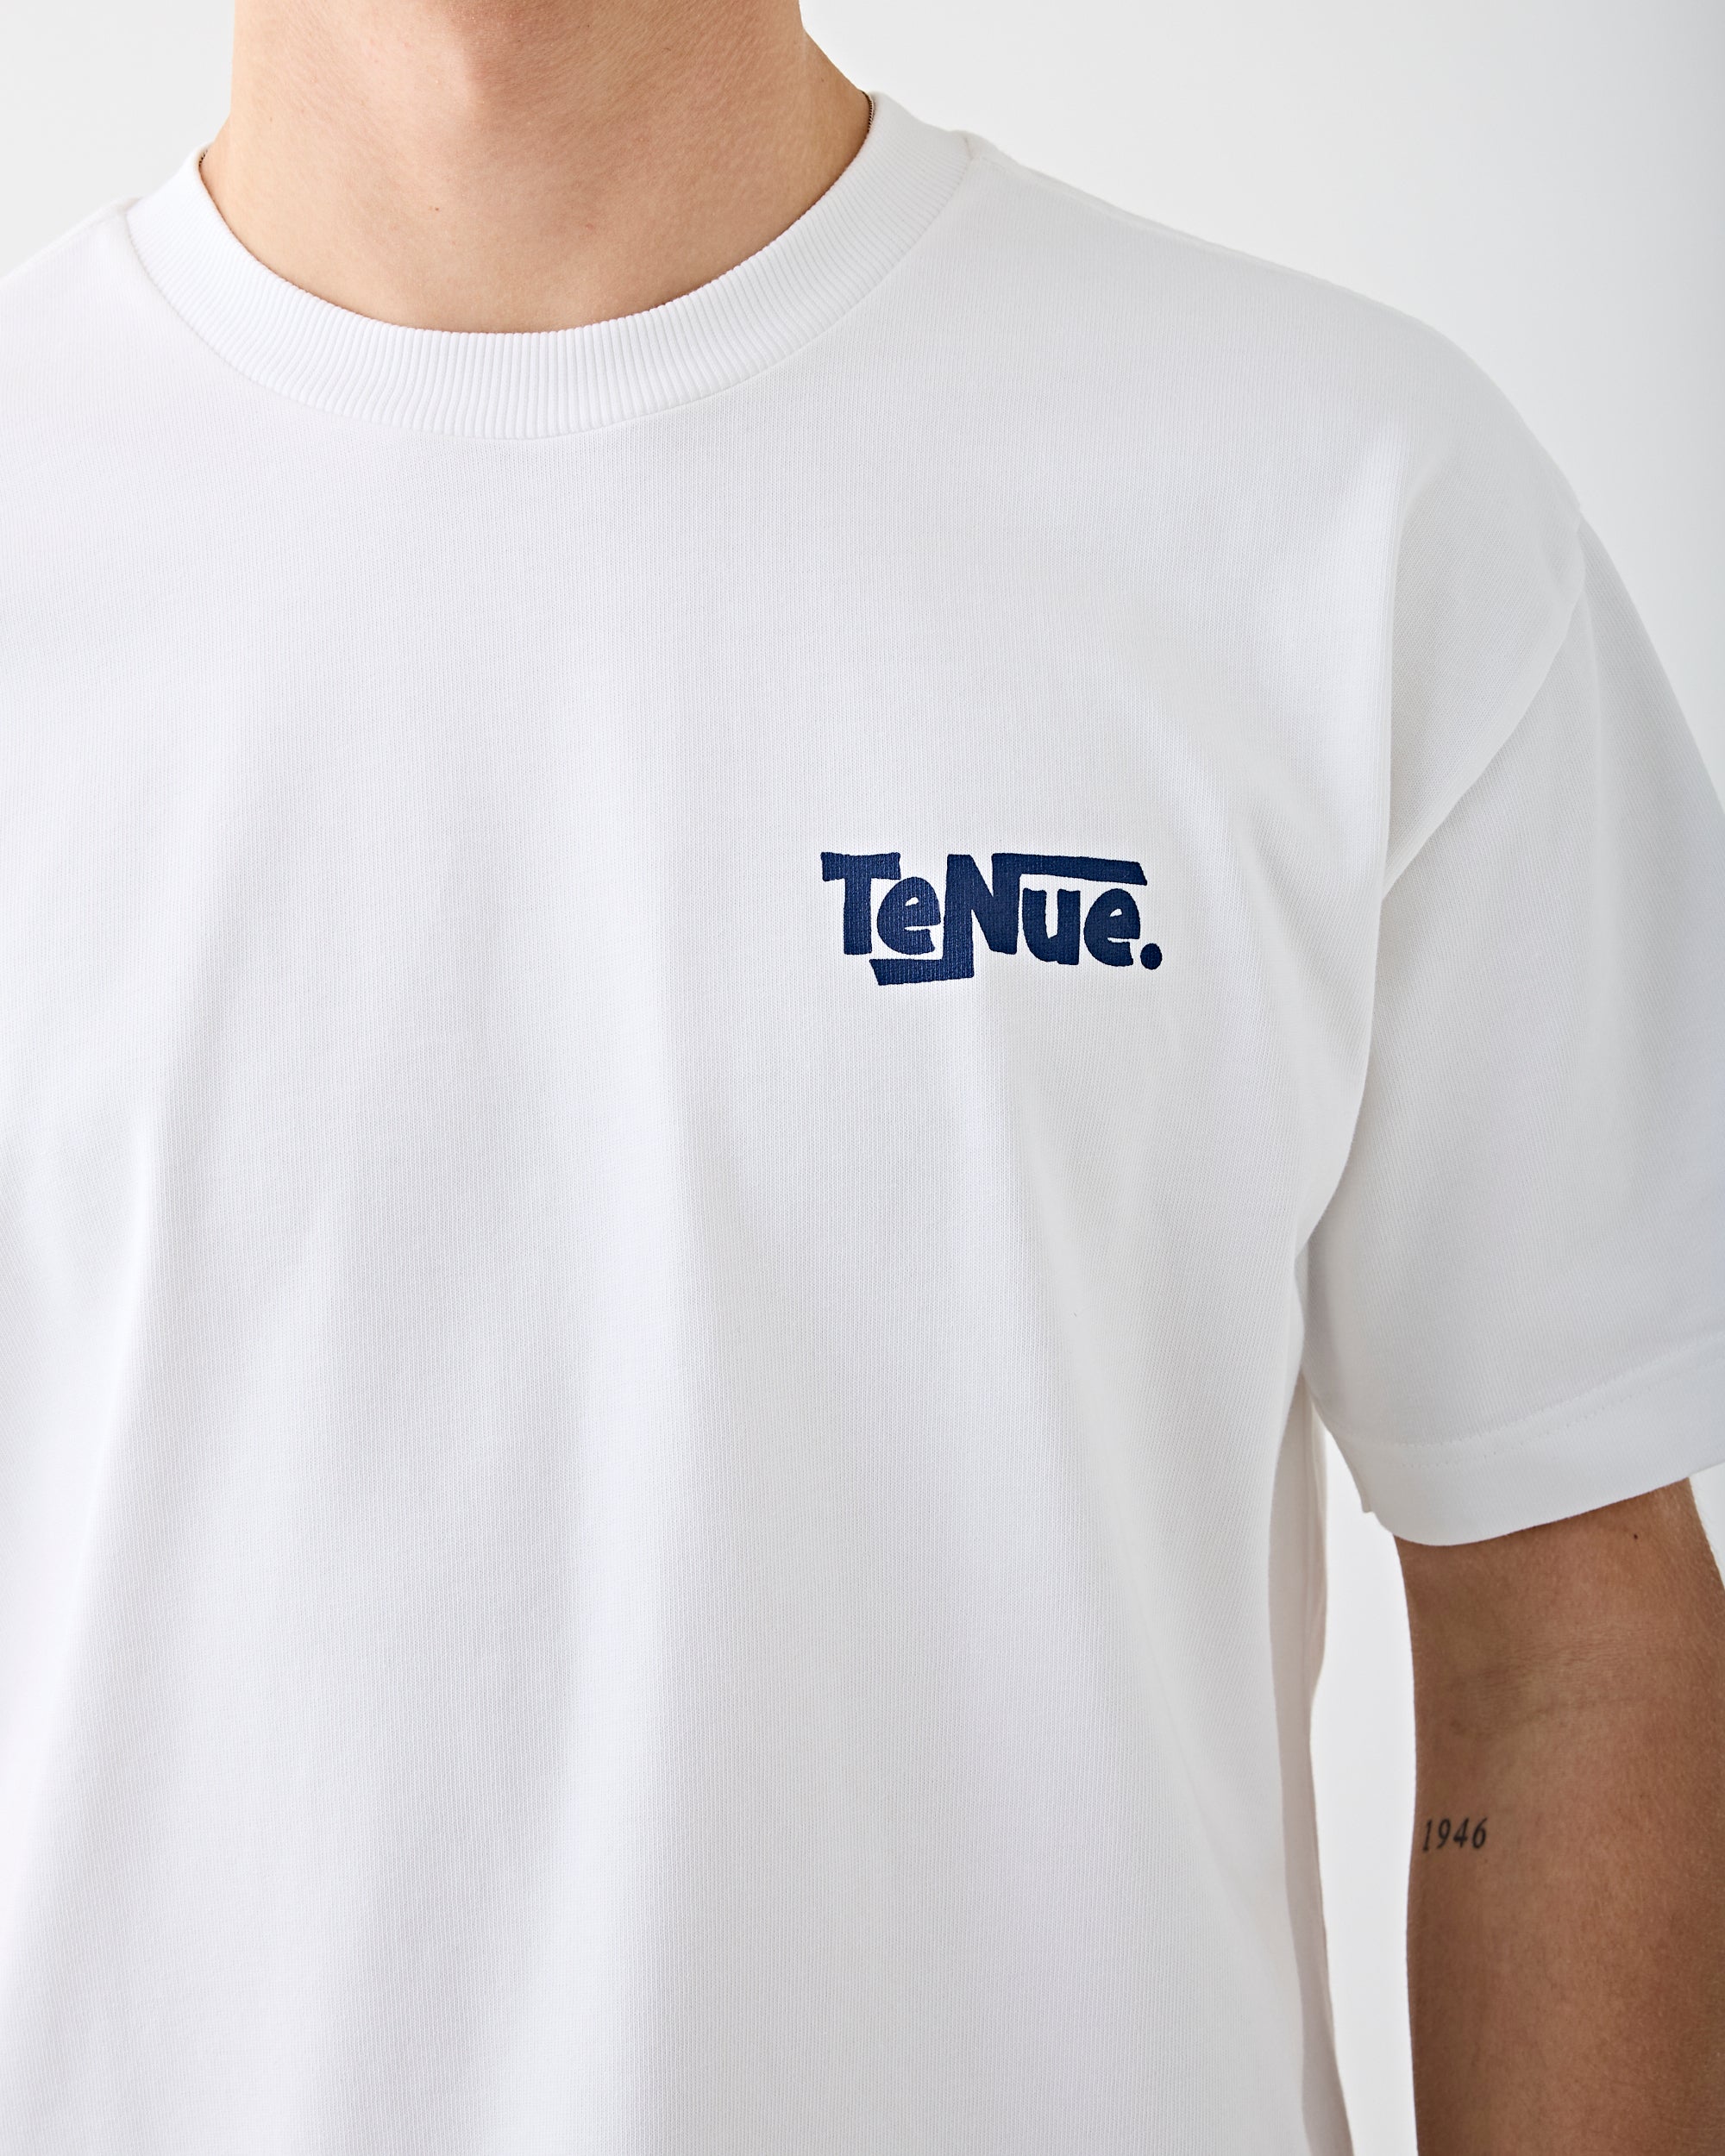 Tenue. Bruce W.W. Logo Tee T-shirt S/S Men